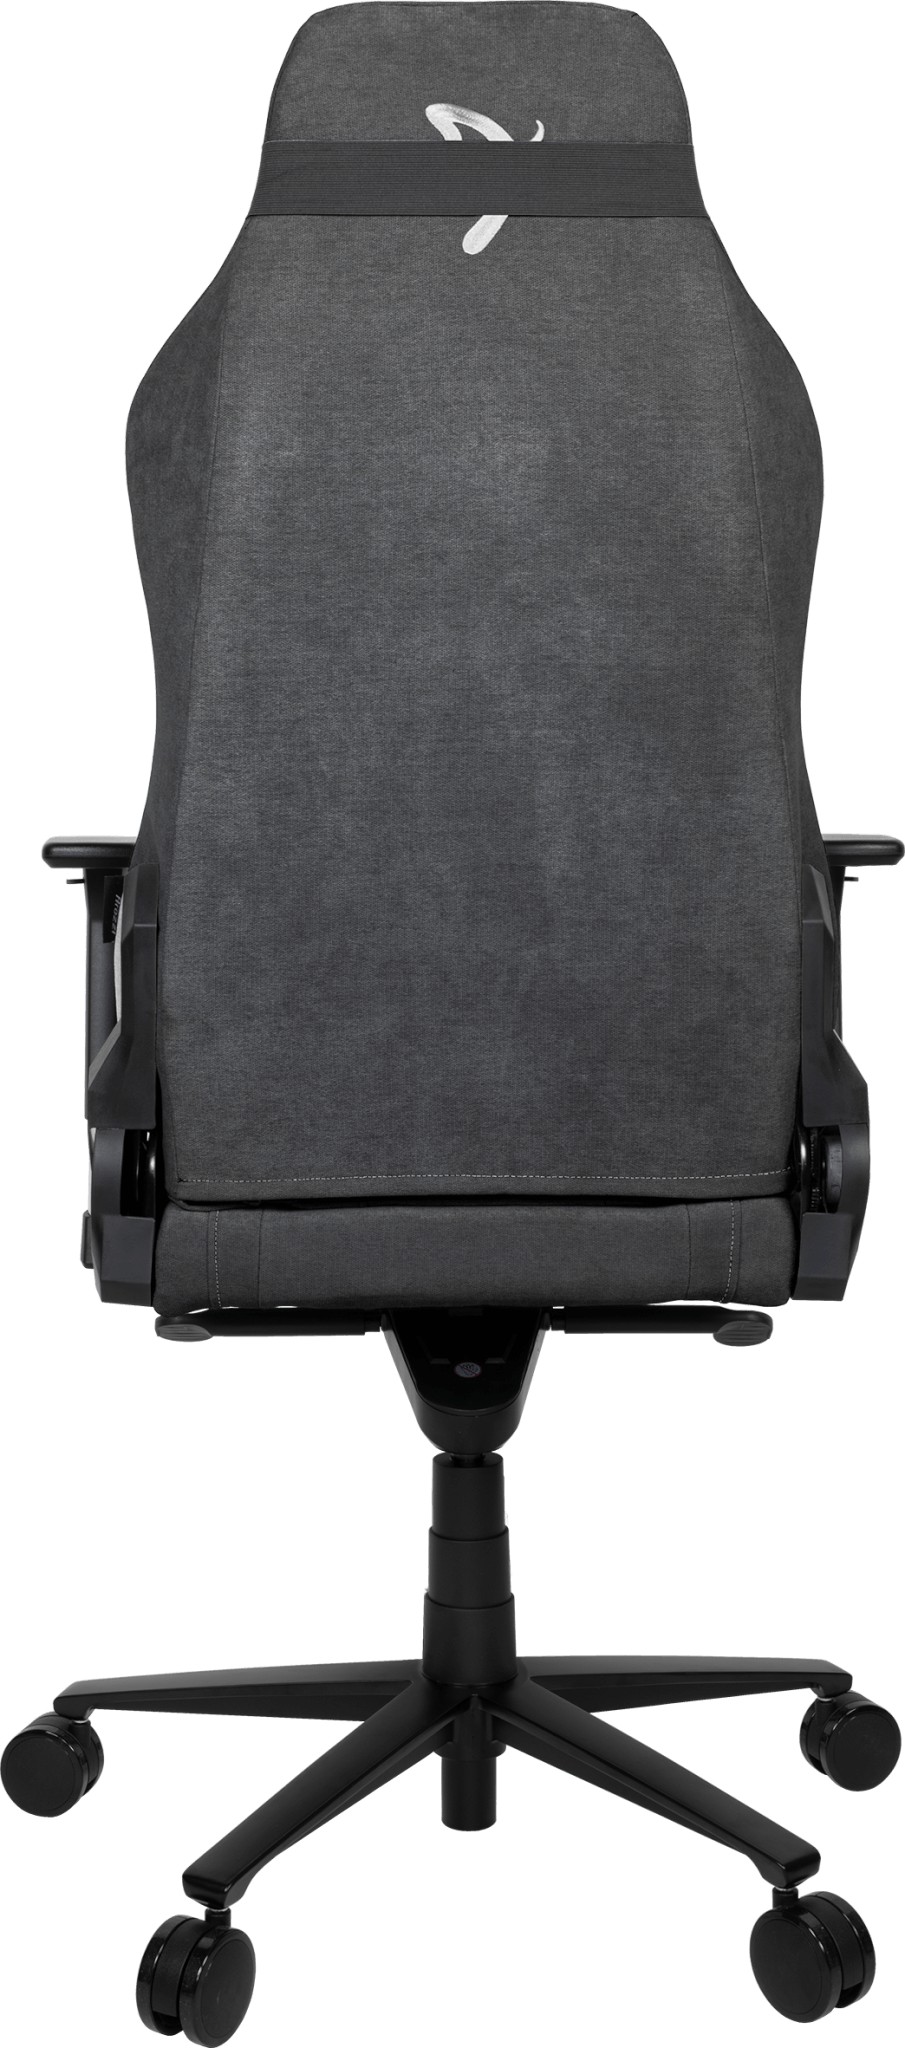 Arozzi VERNAZZA SOFT FABRIC Dark Grey gaming chair